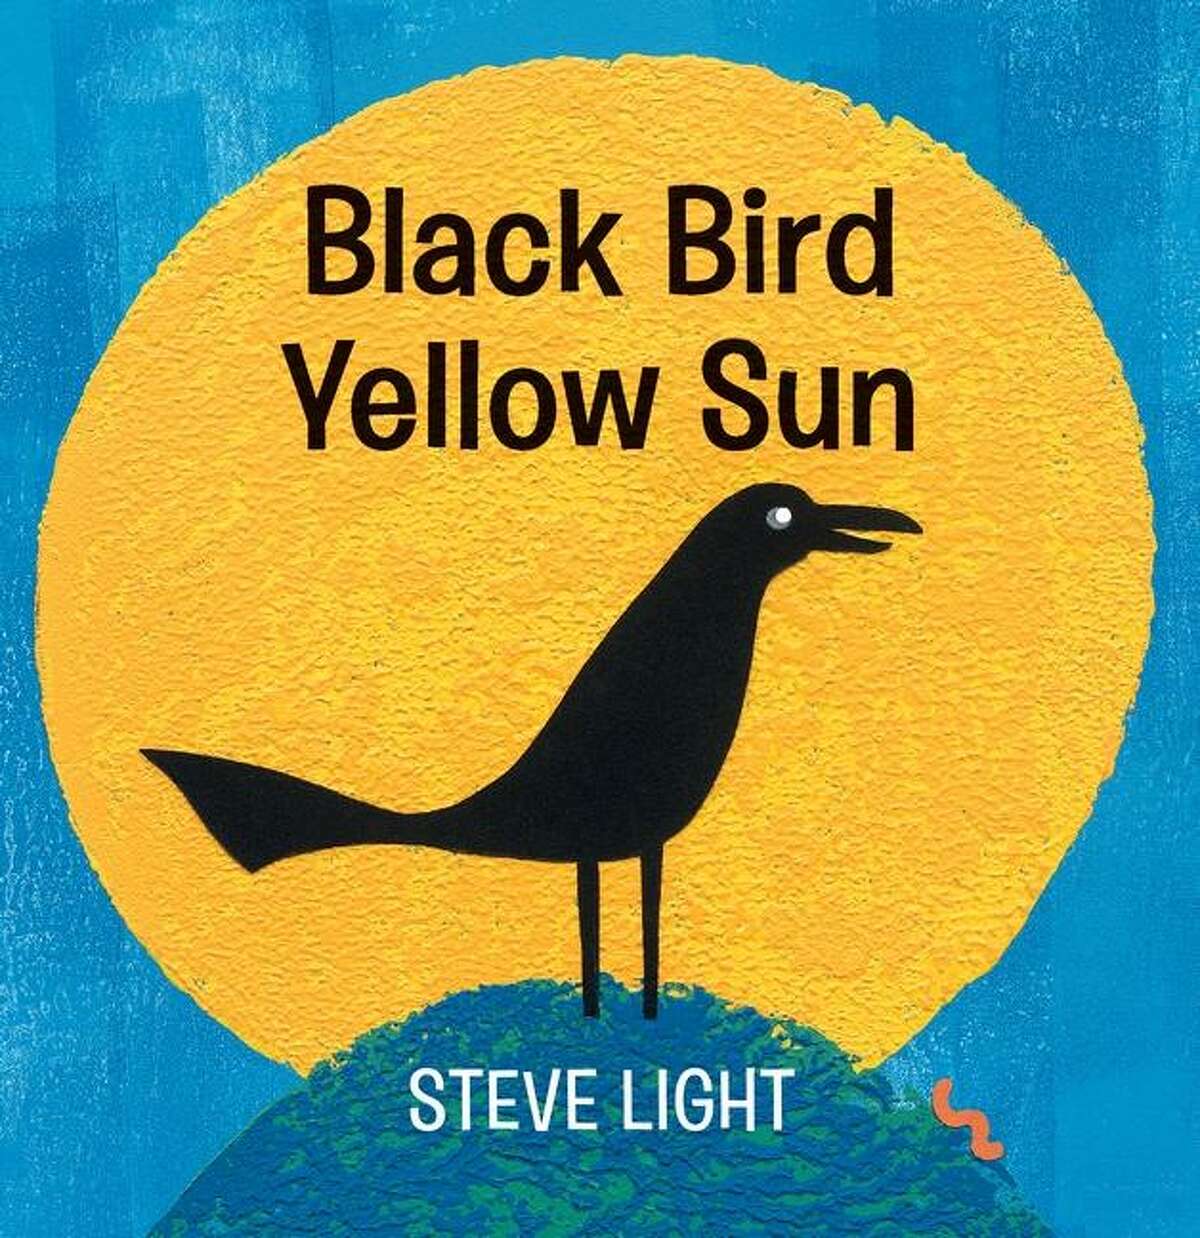 ?“Black Bird Yellow Sun?” By Steve Light $7.99 Candlewick Press